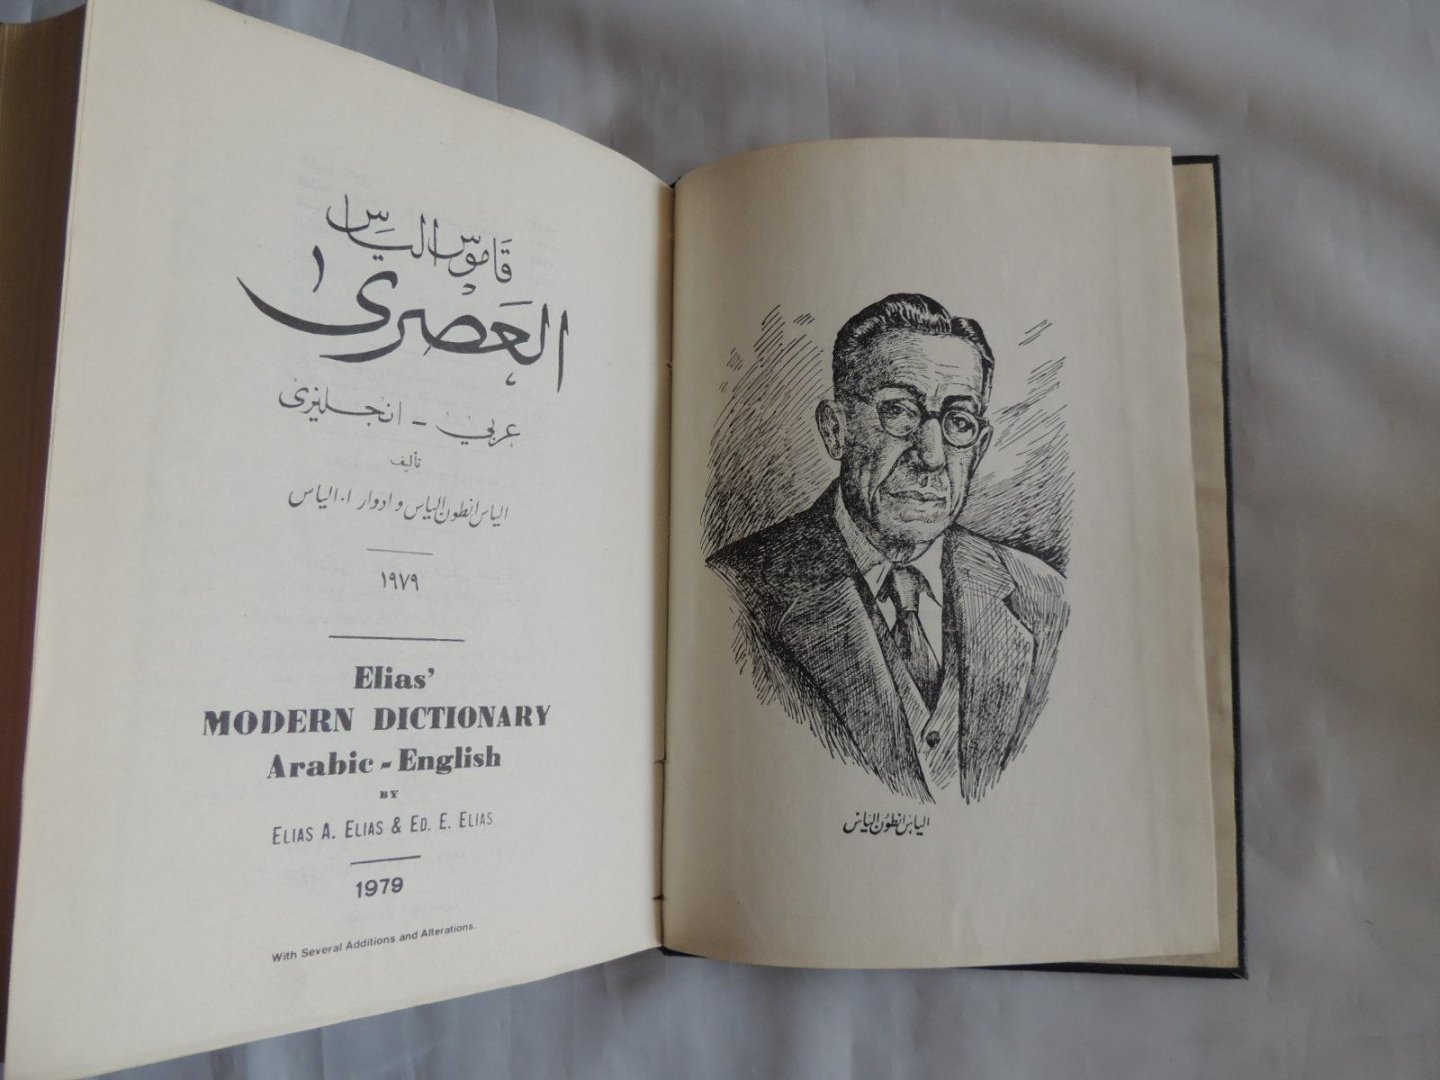 Elias A. & Edward E. Elias / Spiro, S, Bey. - Elias'  ELIA'S, modern dictionary, Arabic-English